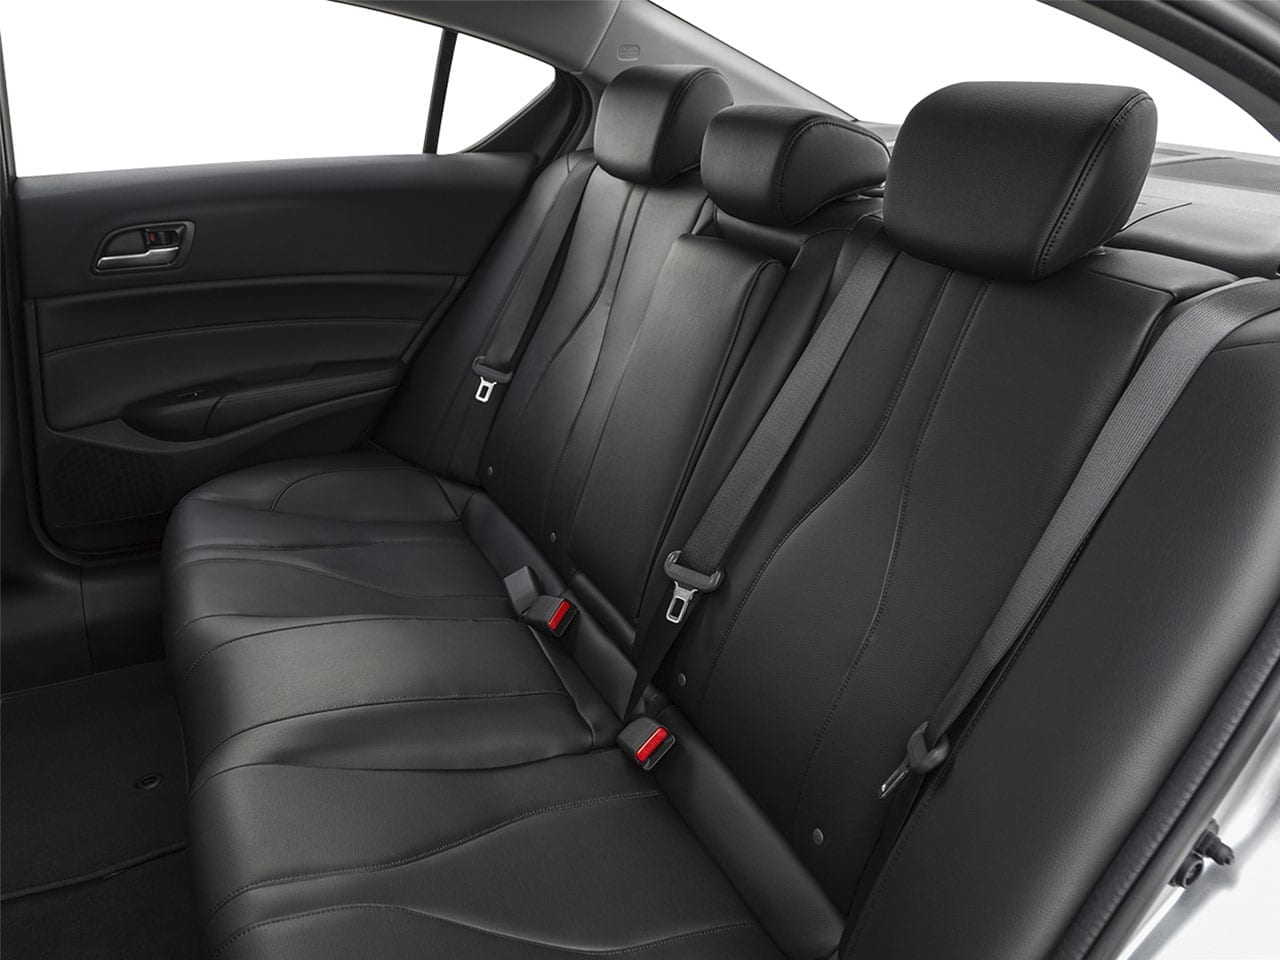 2020 Acura ILX Standard Interior